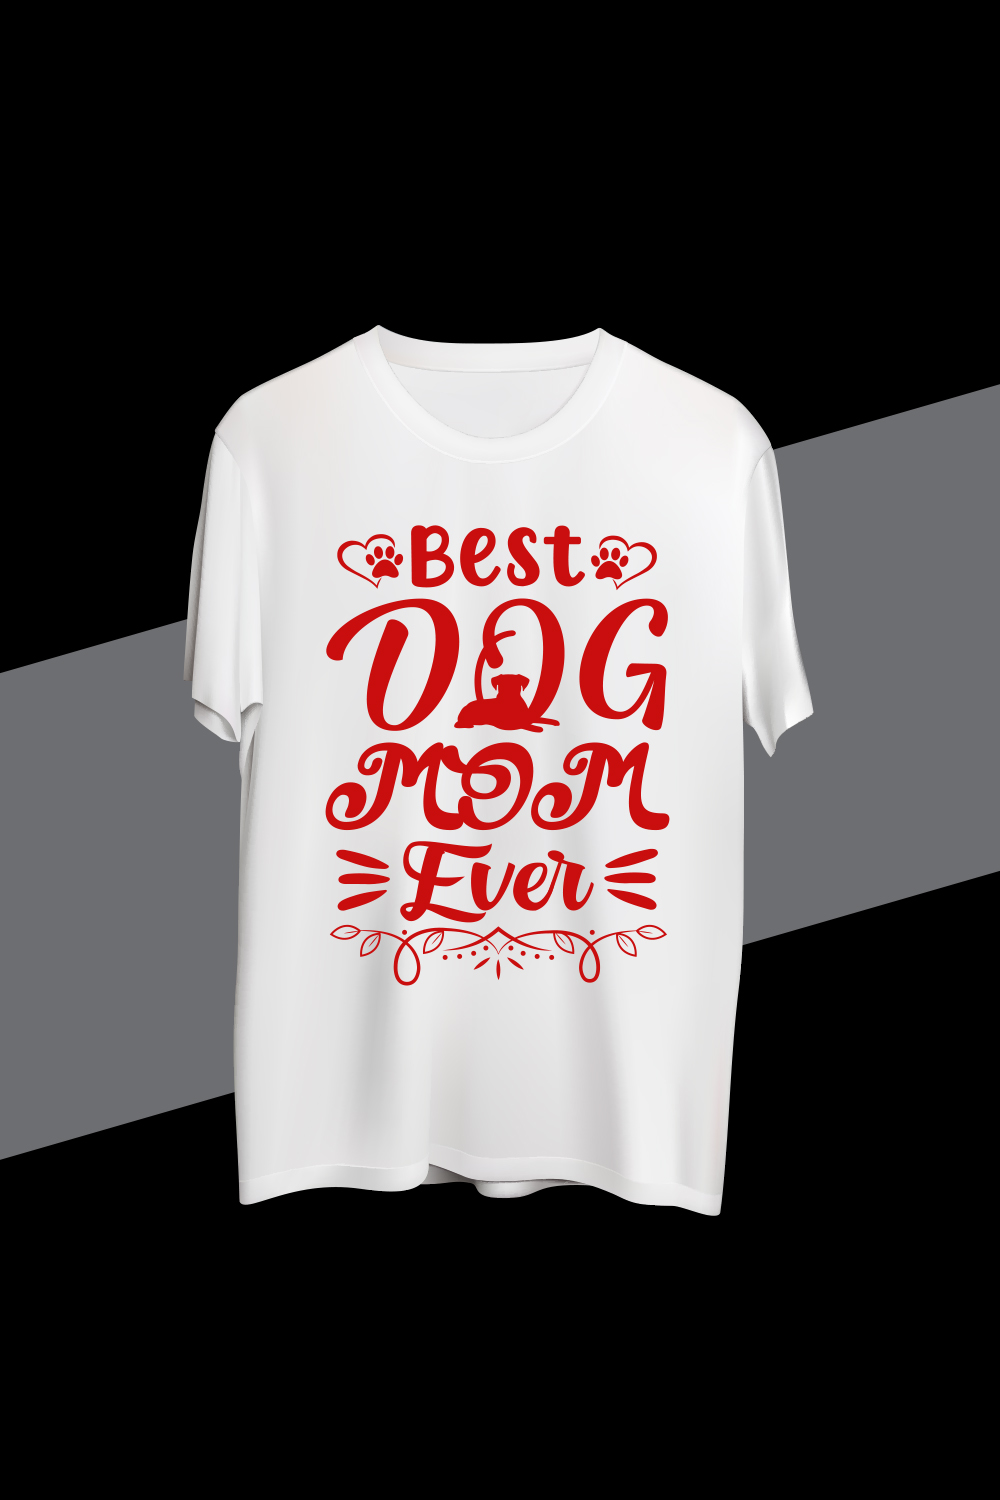 Best Dog Mom Ever T-shirt design pinterest preview image.